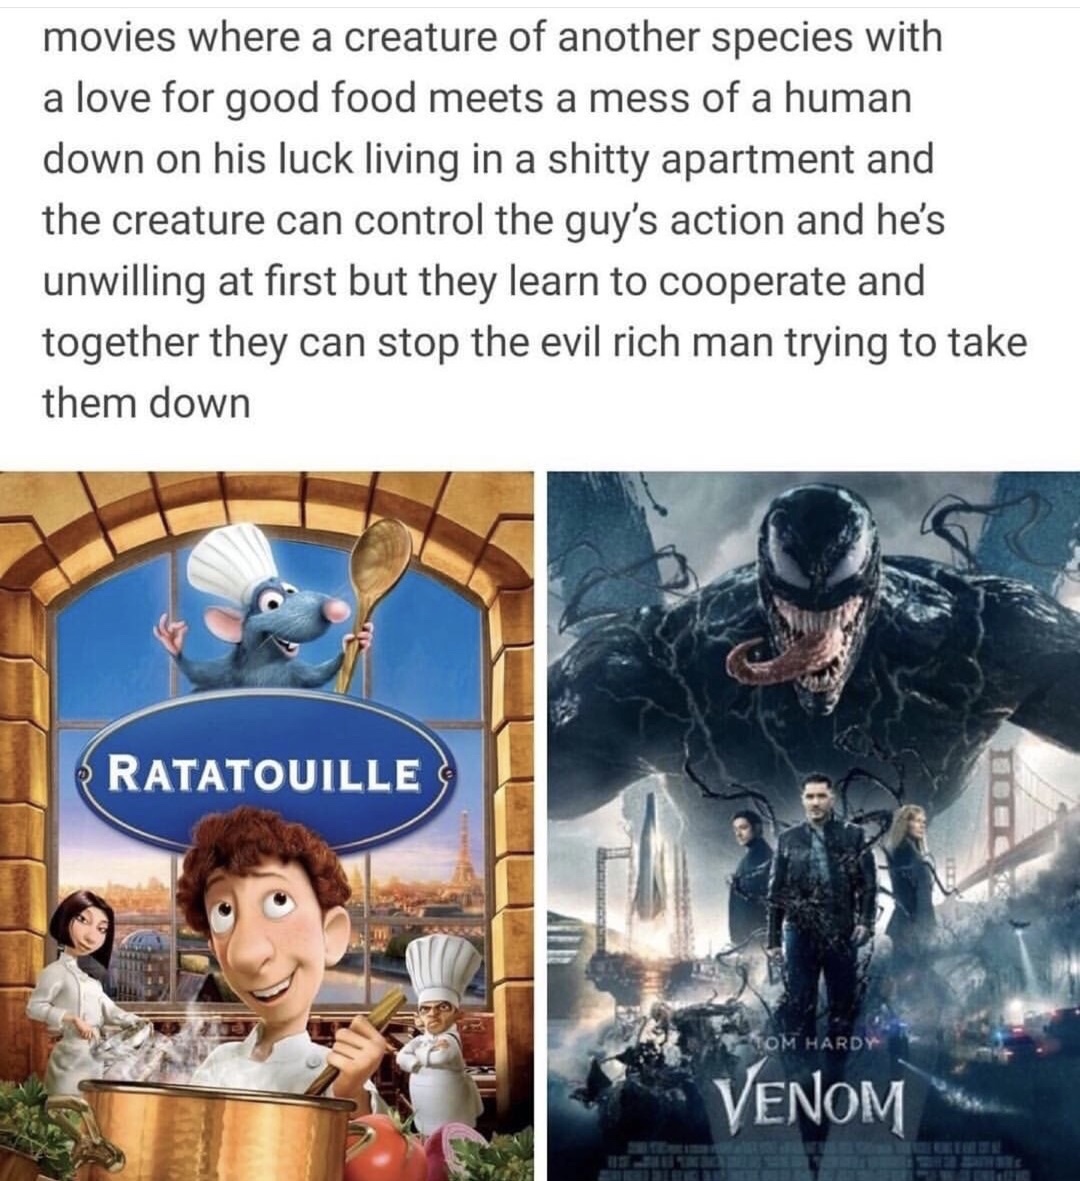 funny meme comparing the movies Ratatouille and Venom